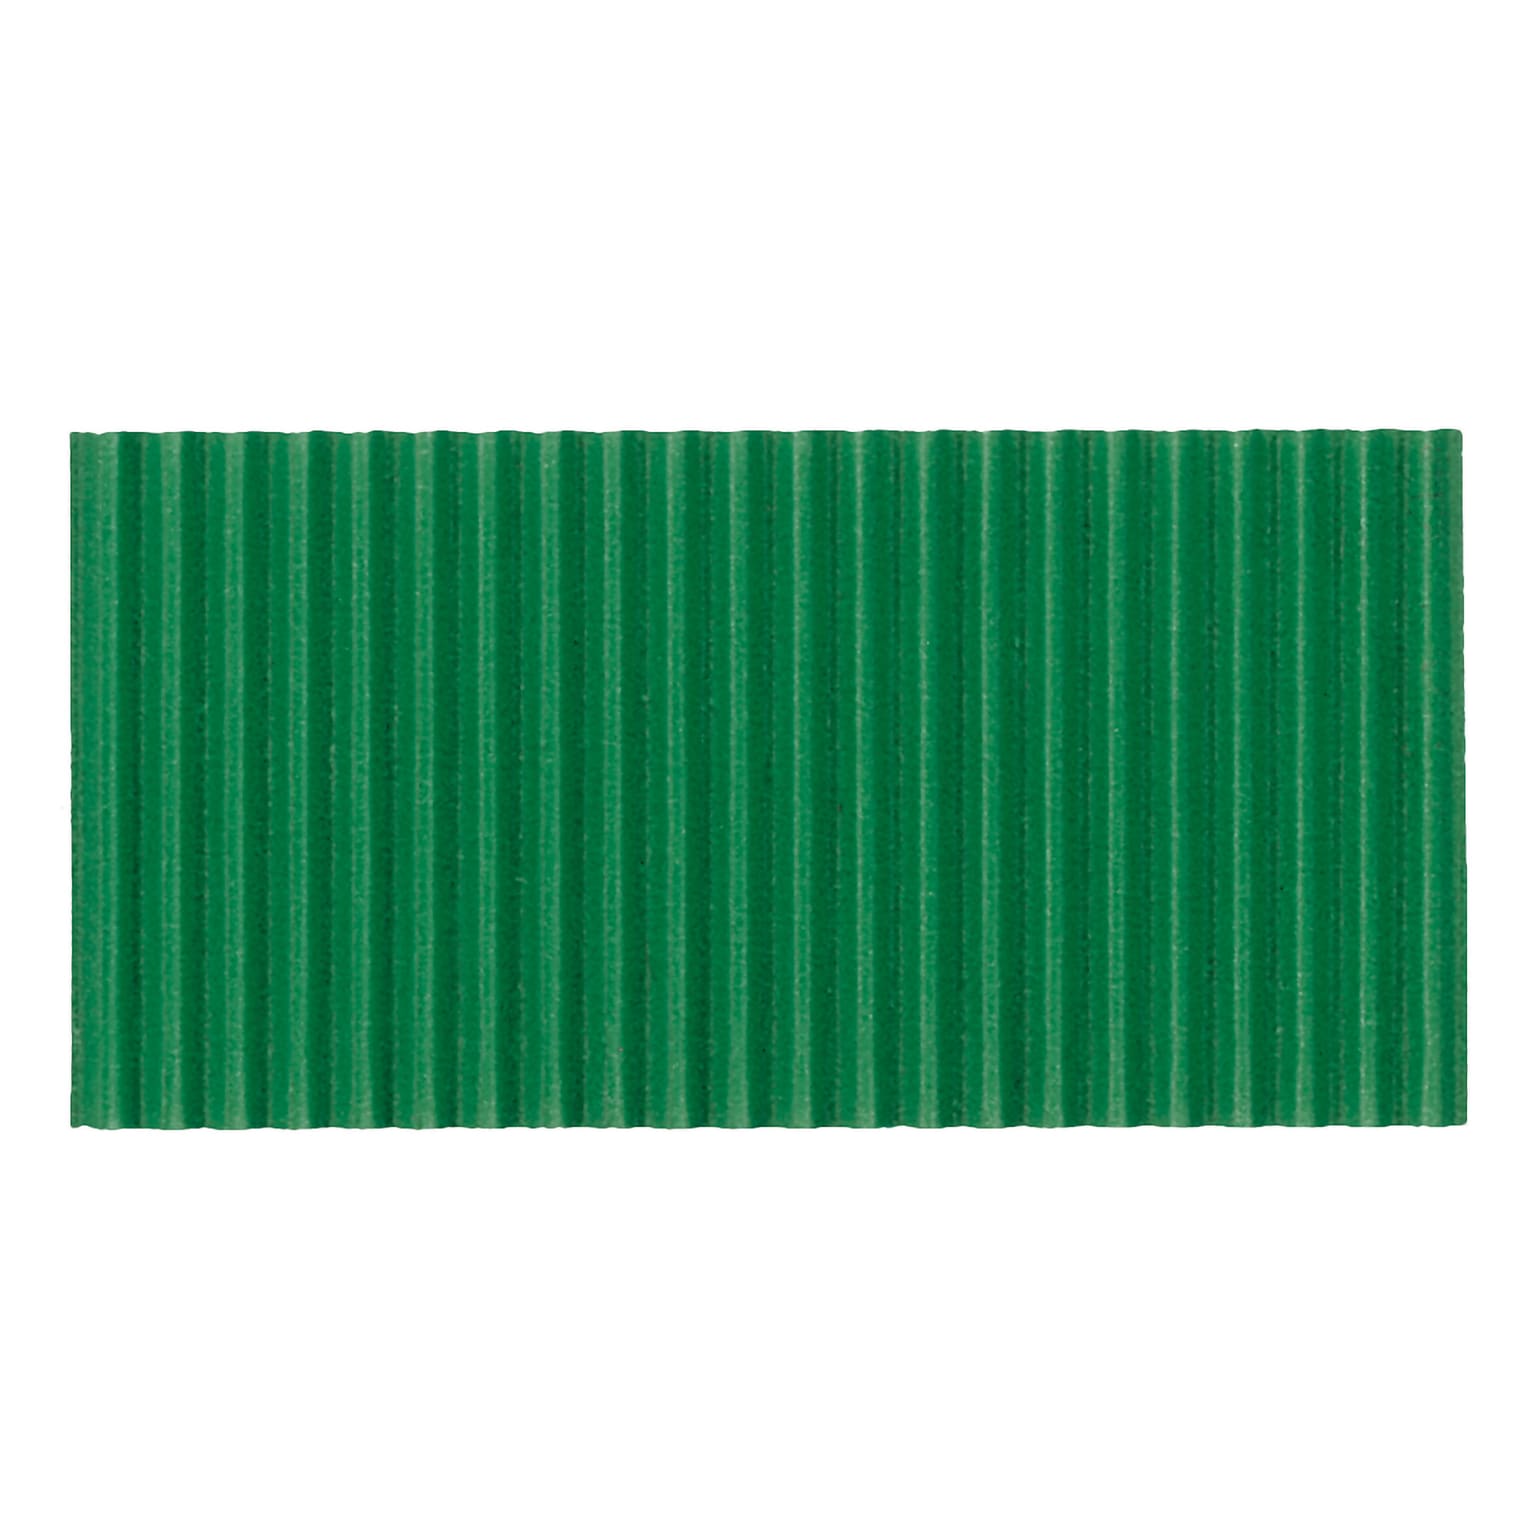 Pacon Corobuff 48 x 300 Corrugated Paper Roll, Emerald Green (0011141)